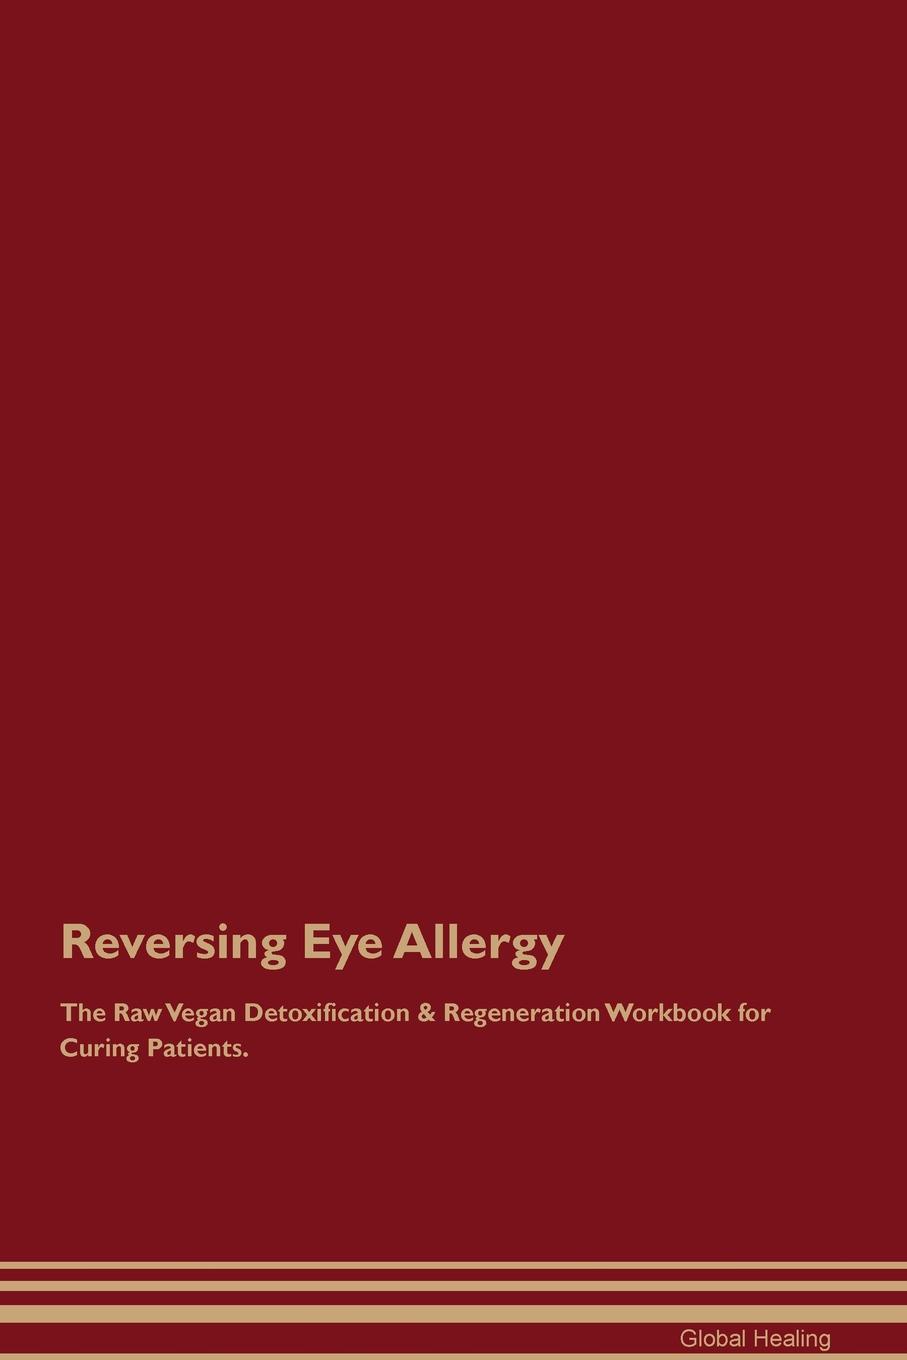 Reversing Eye Allergy The Raw Vegan Detoxification & Regeneration Workbook for Curing Patients